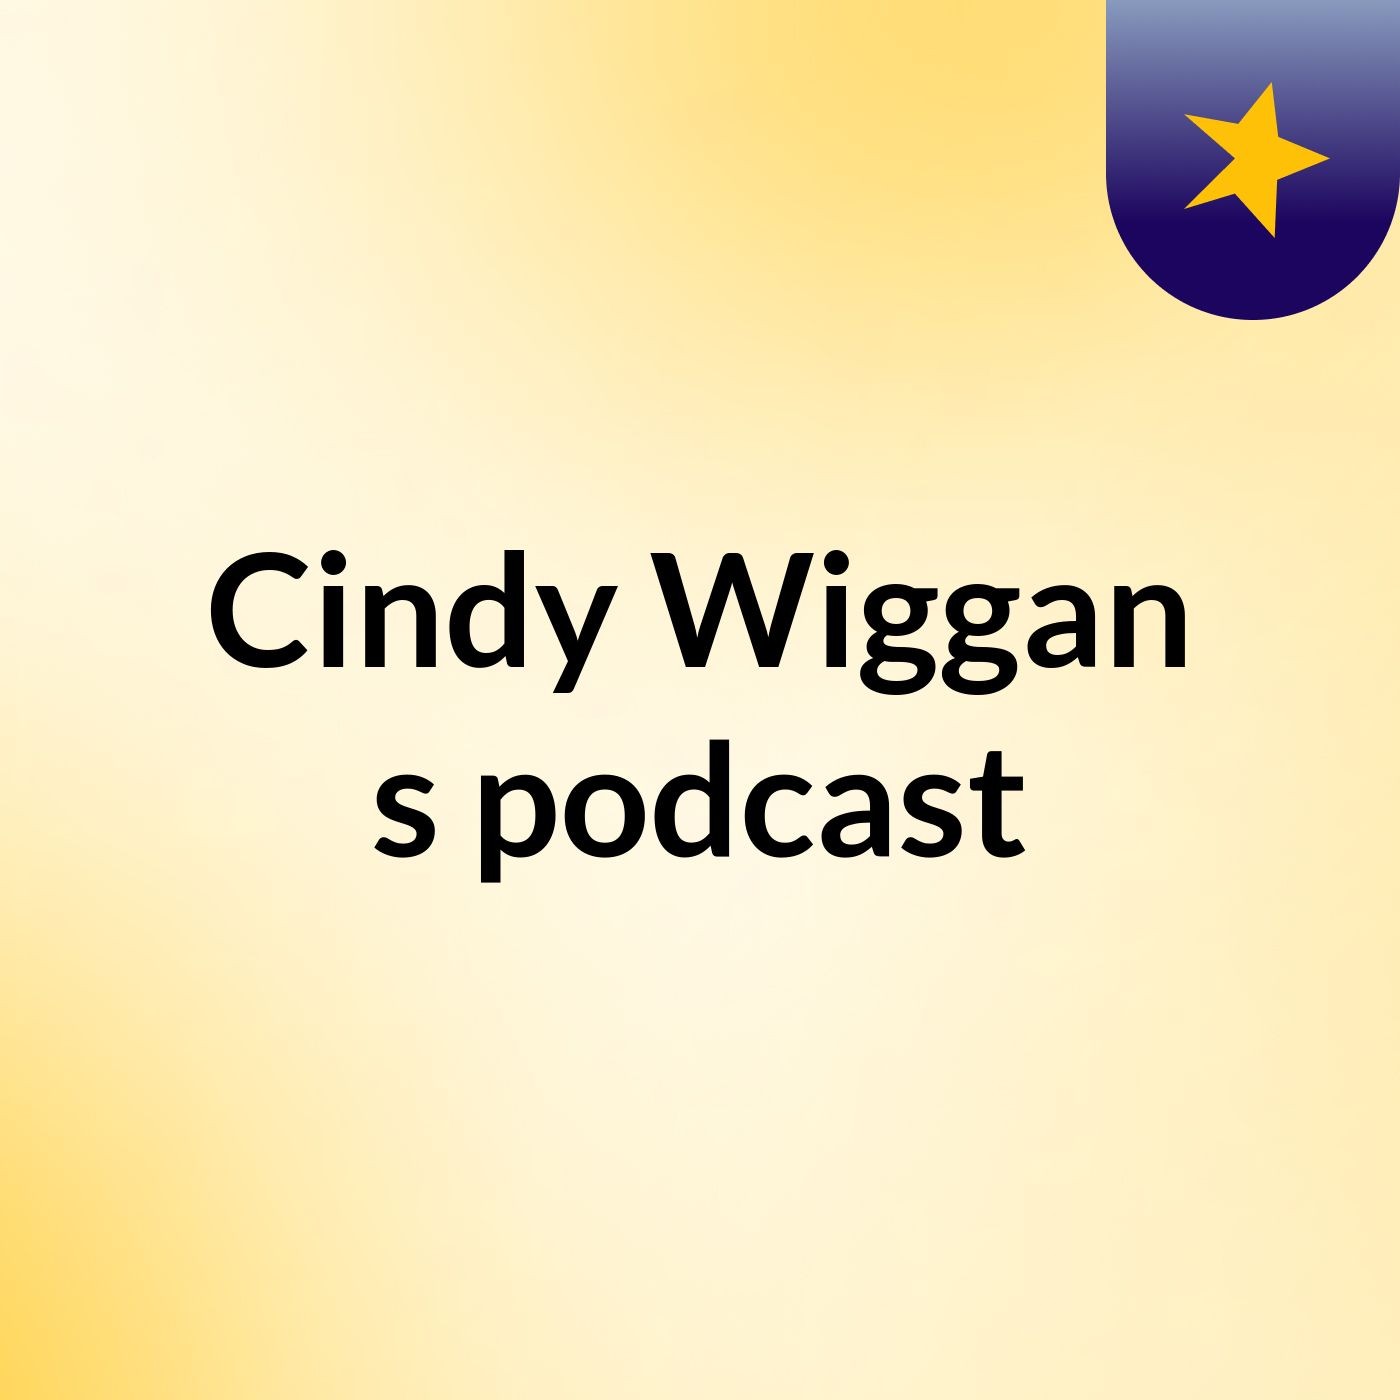 Cindy Wiggan's podcast